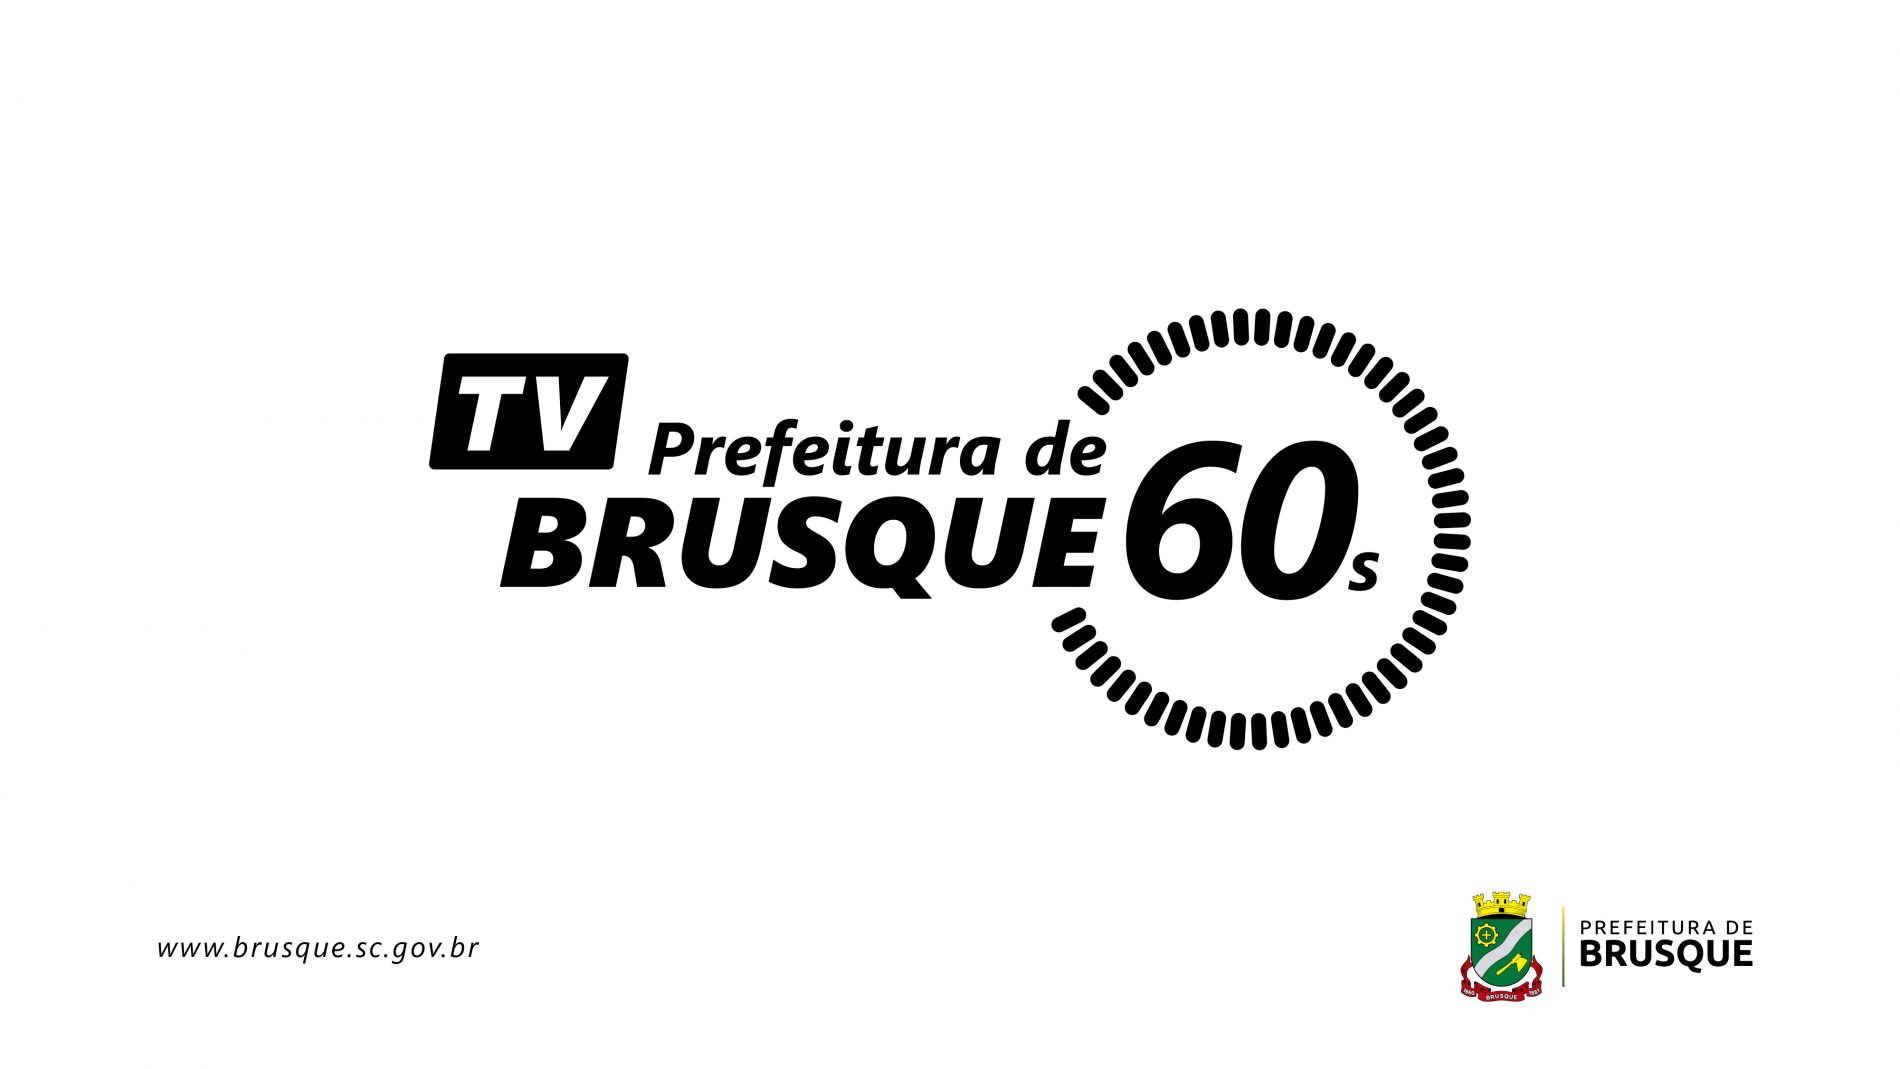 TV Prefeitura de Brusque 60s!